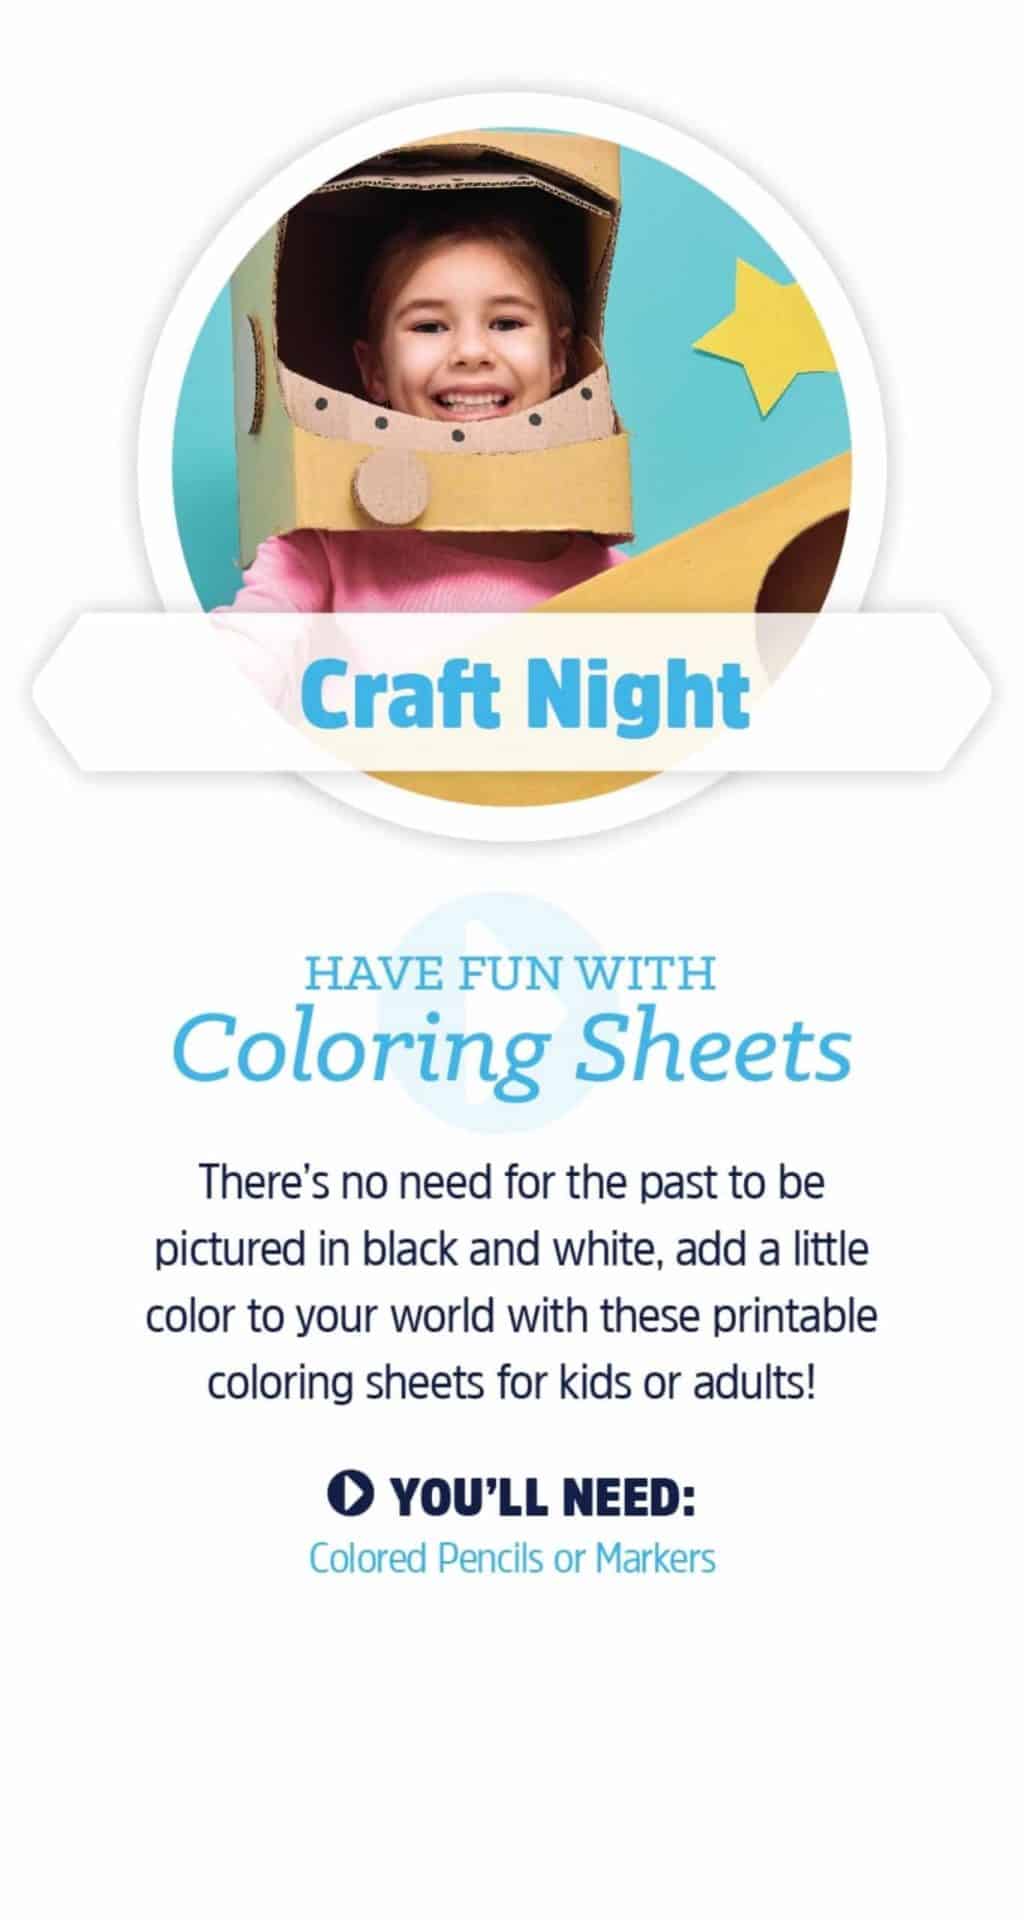 HAVEFUNWITH Coloring Sheets